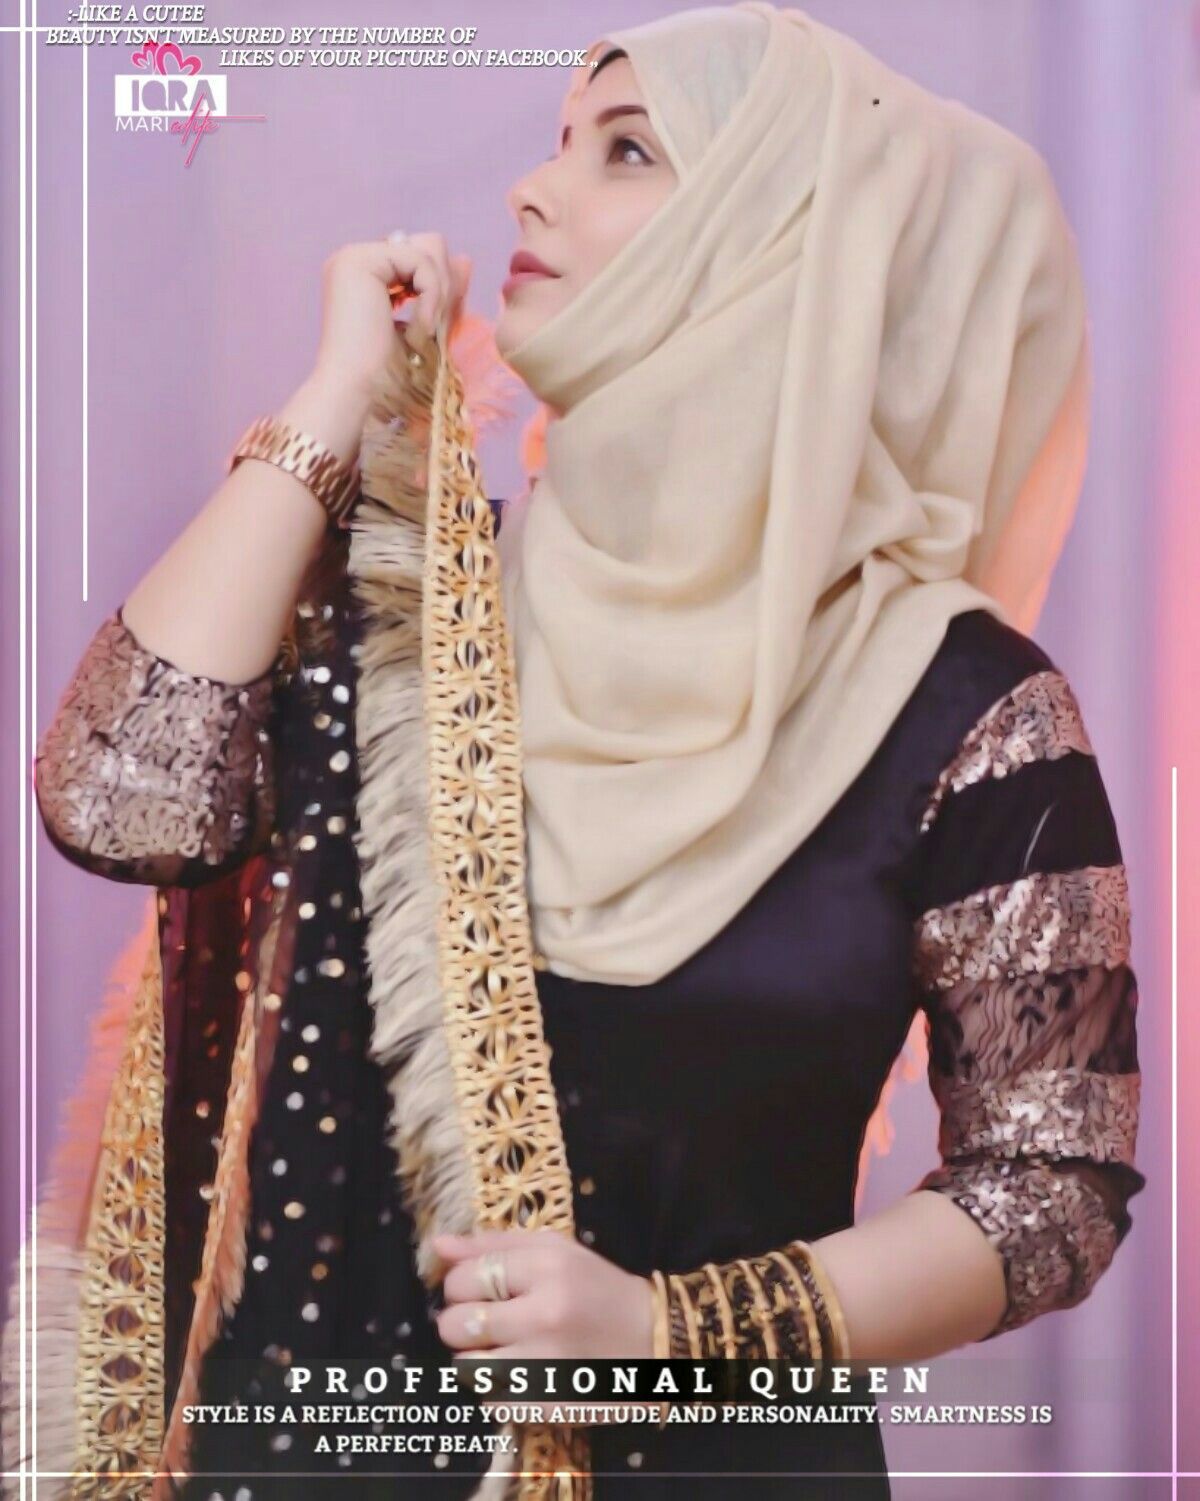 Islamic dpz. Islamic girl image, Stylish girl pic, Islamic girl